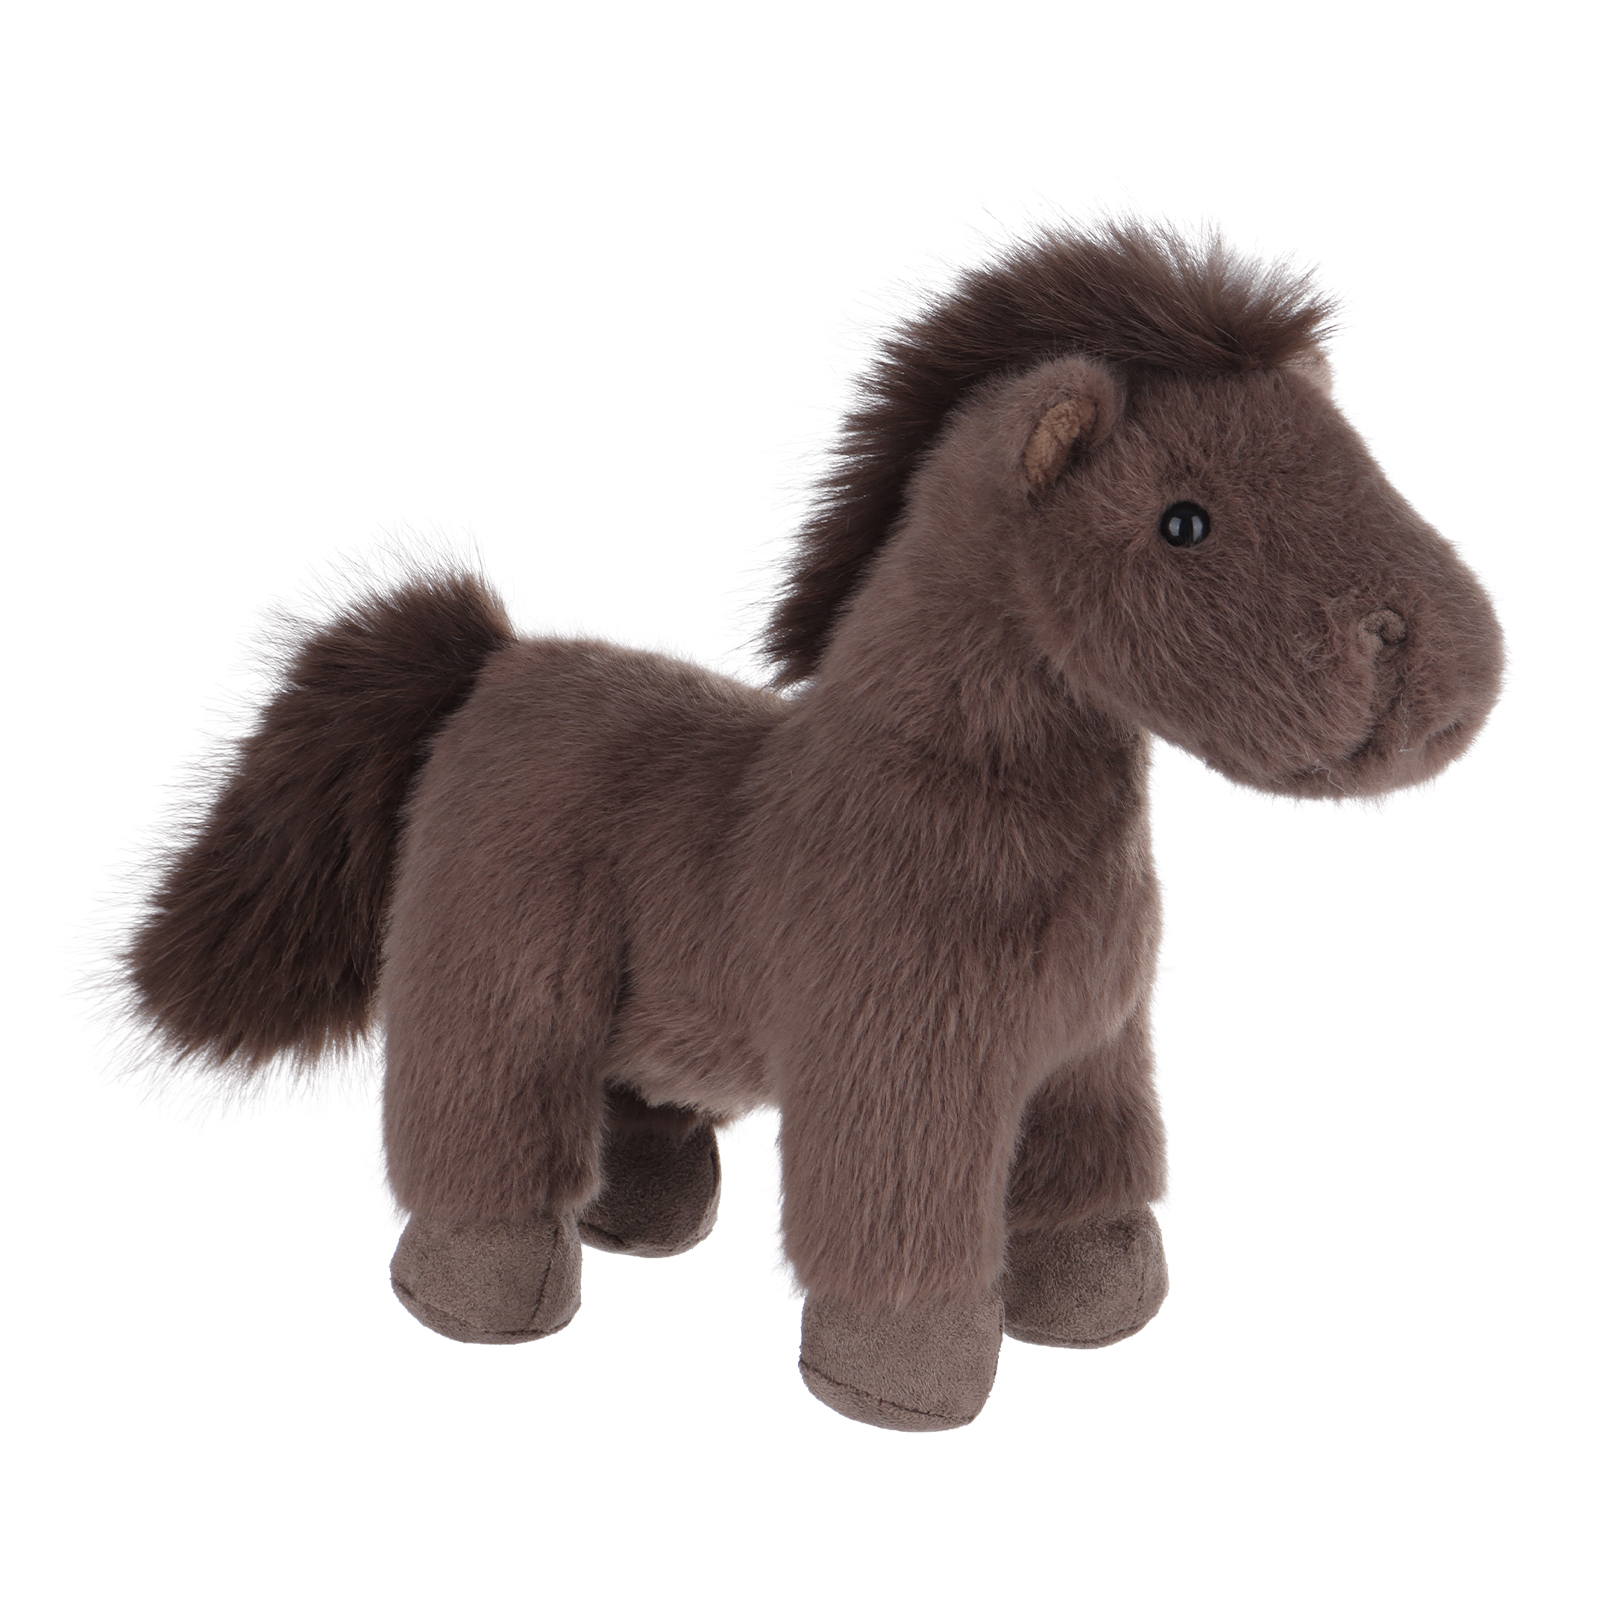 Apricot Lamb wild pony – brown Stuffed Animal Soft Plush Toys